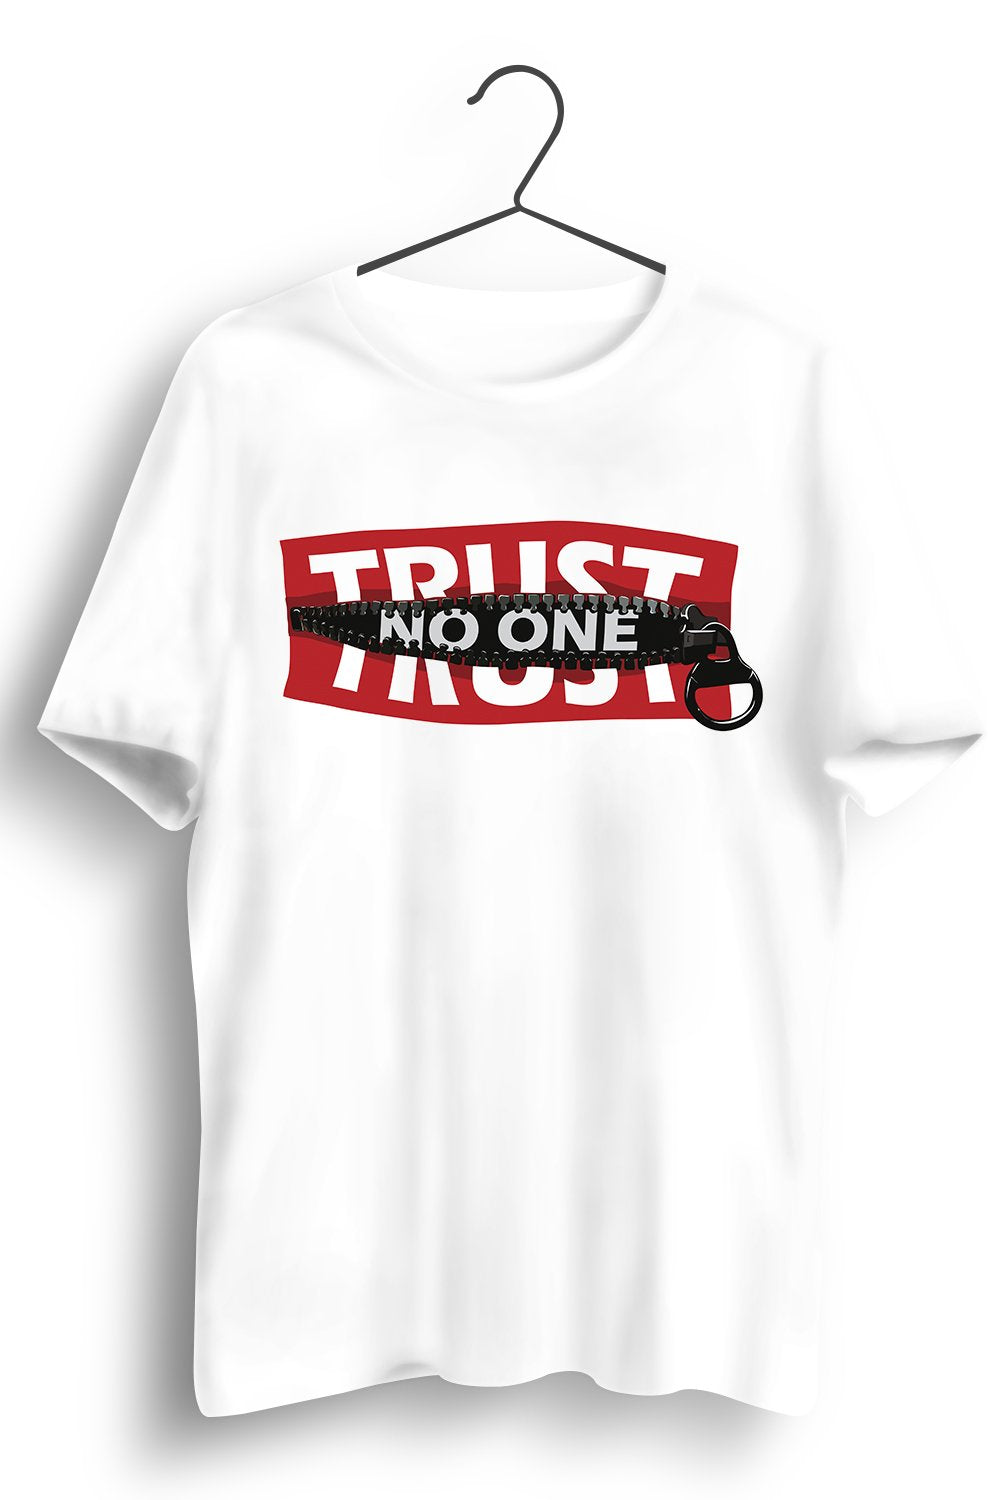 Trust No One Graphic Printed White Tshirt